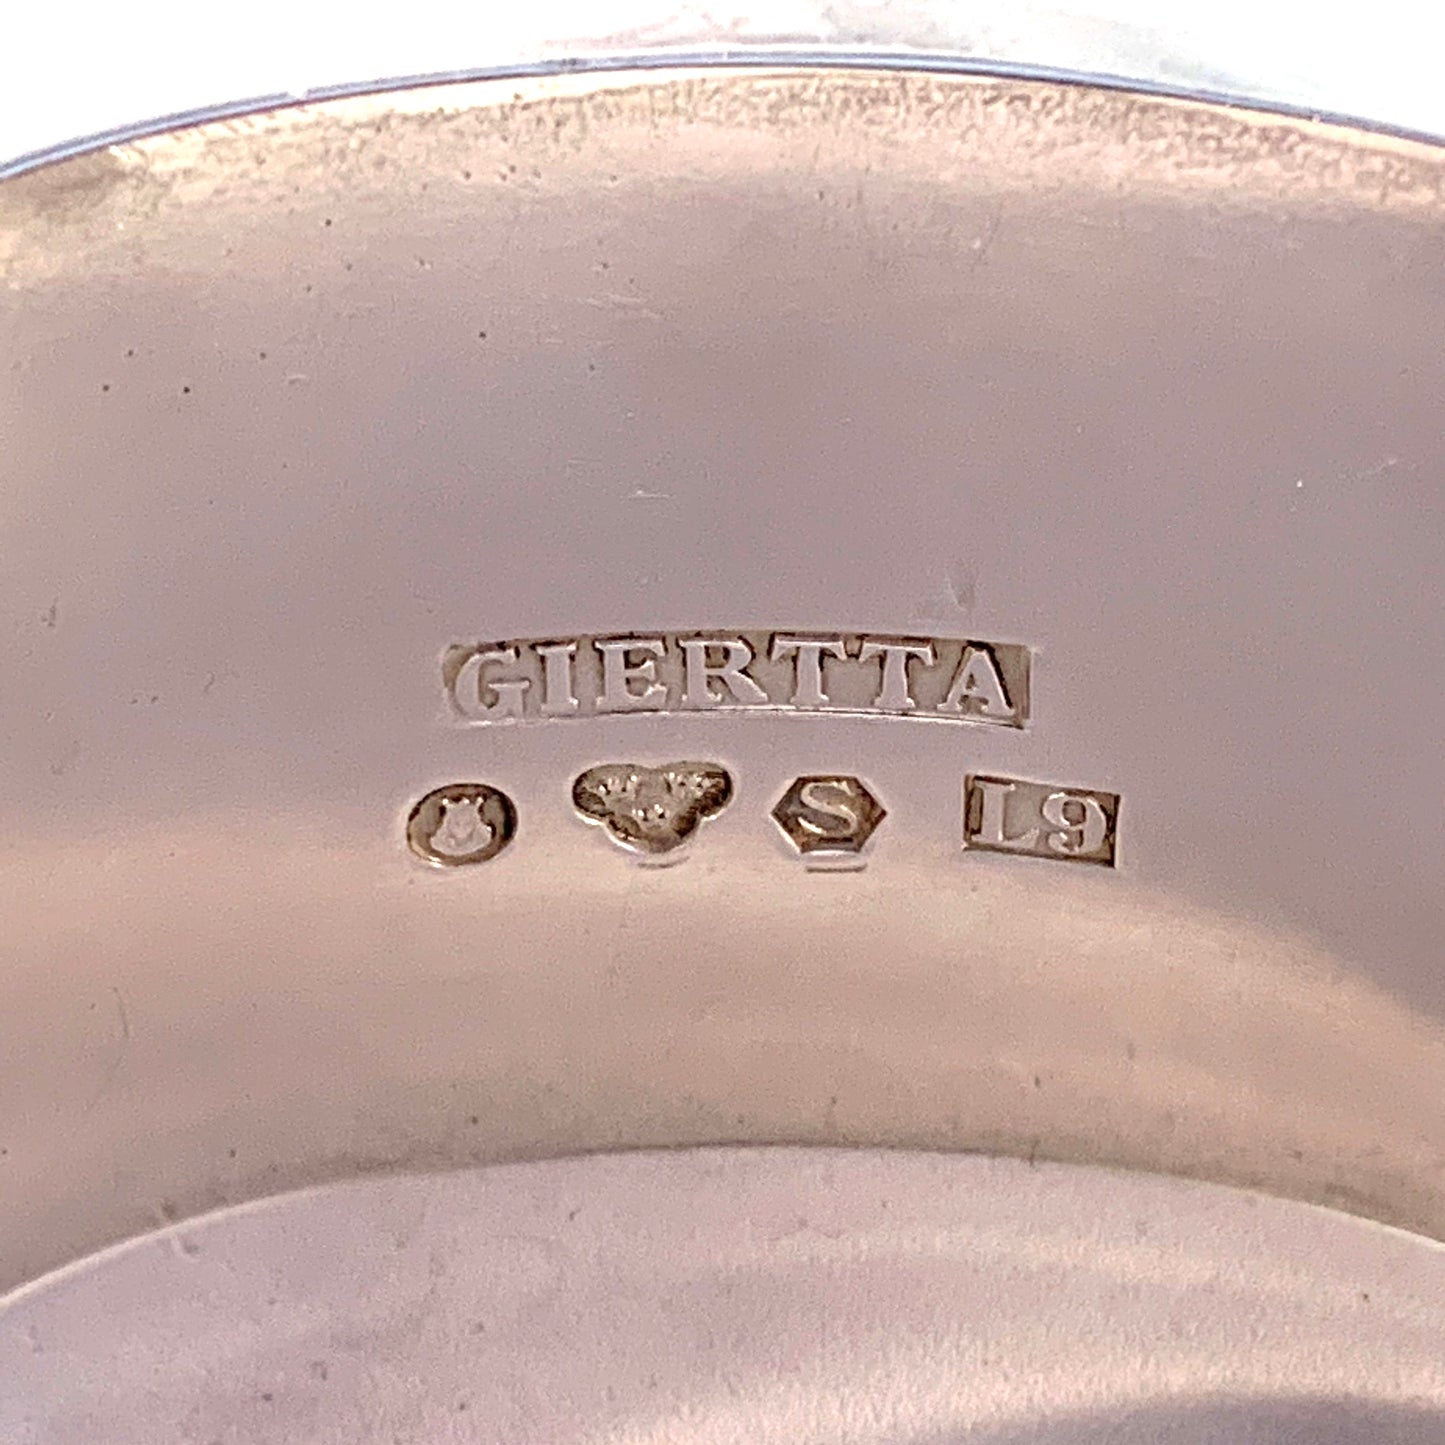 Claes E Giertta, Stockholm 1961 Massive Sterling Silver Chrysocolla Cuff Bracelet.